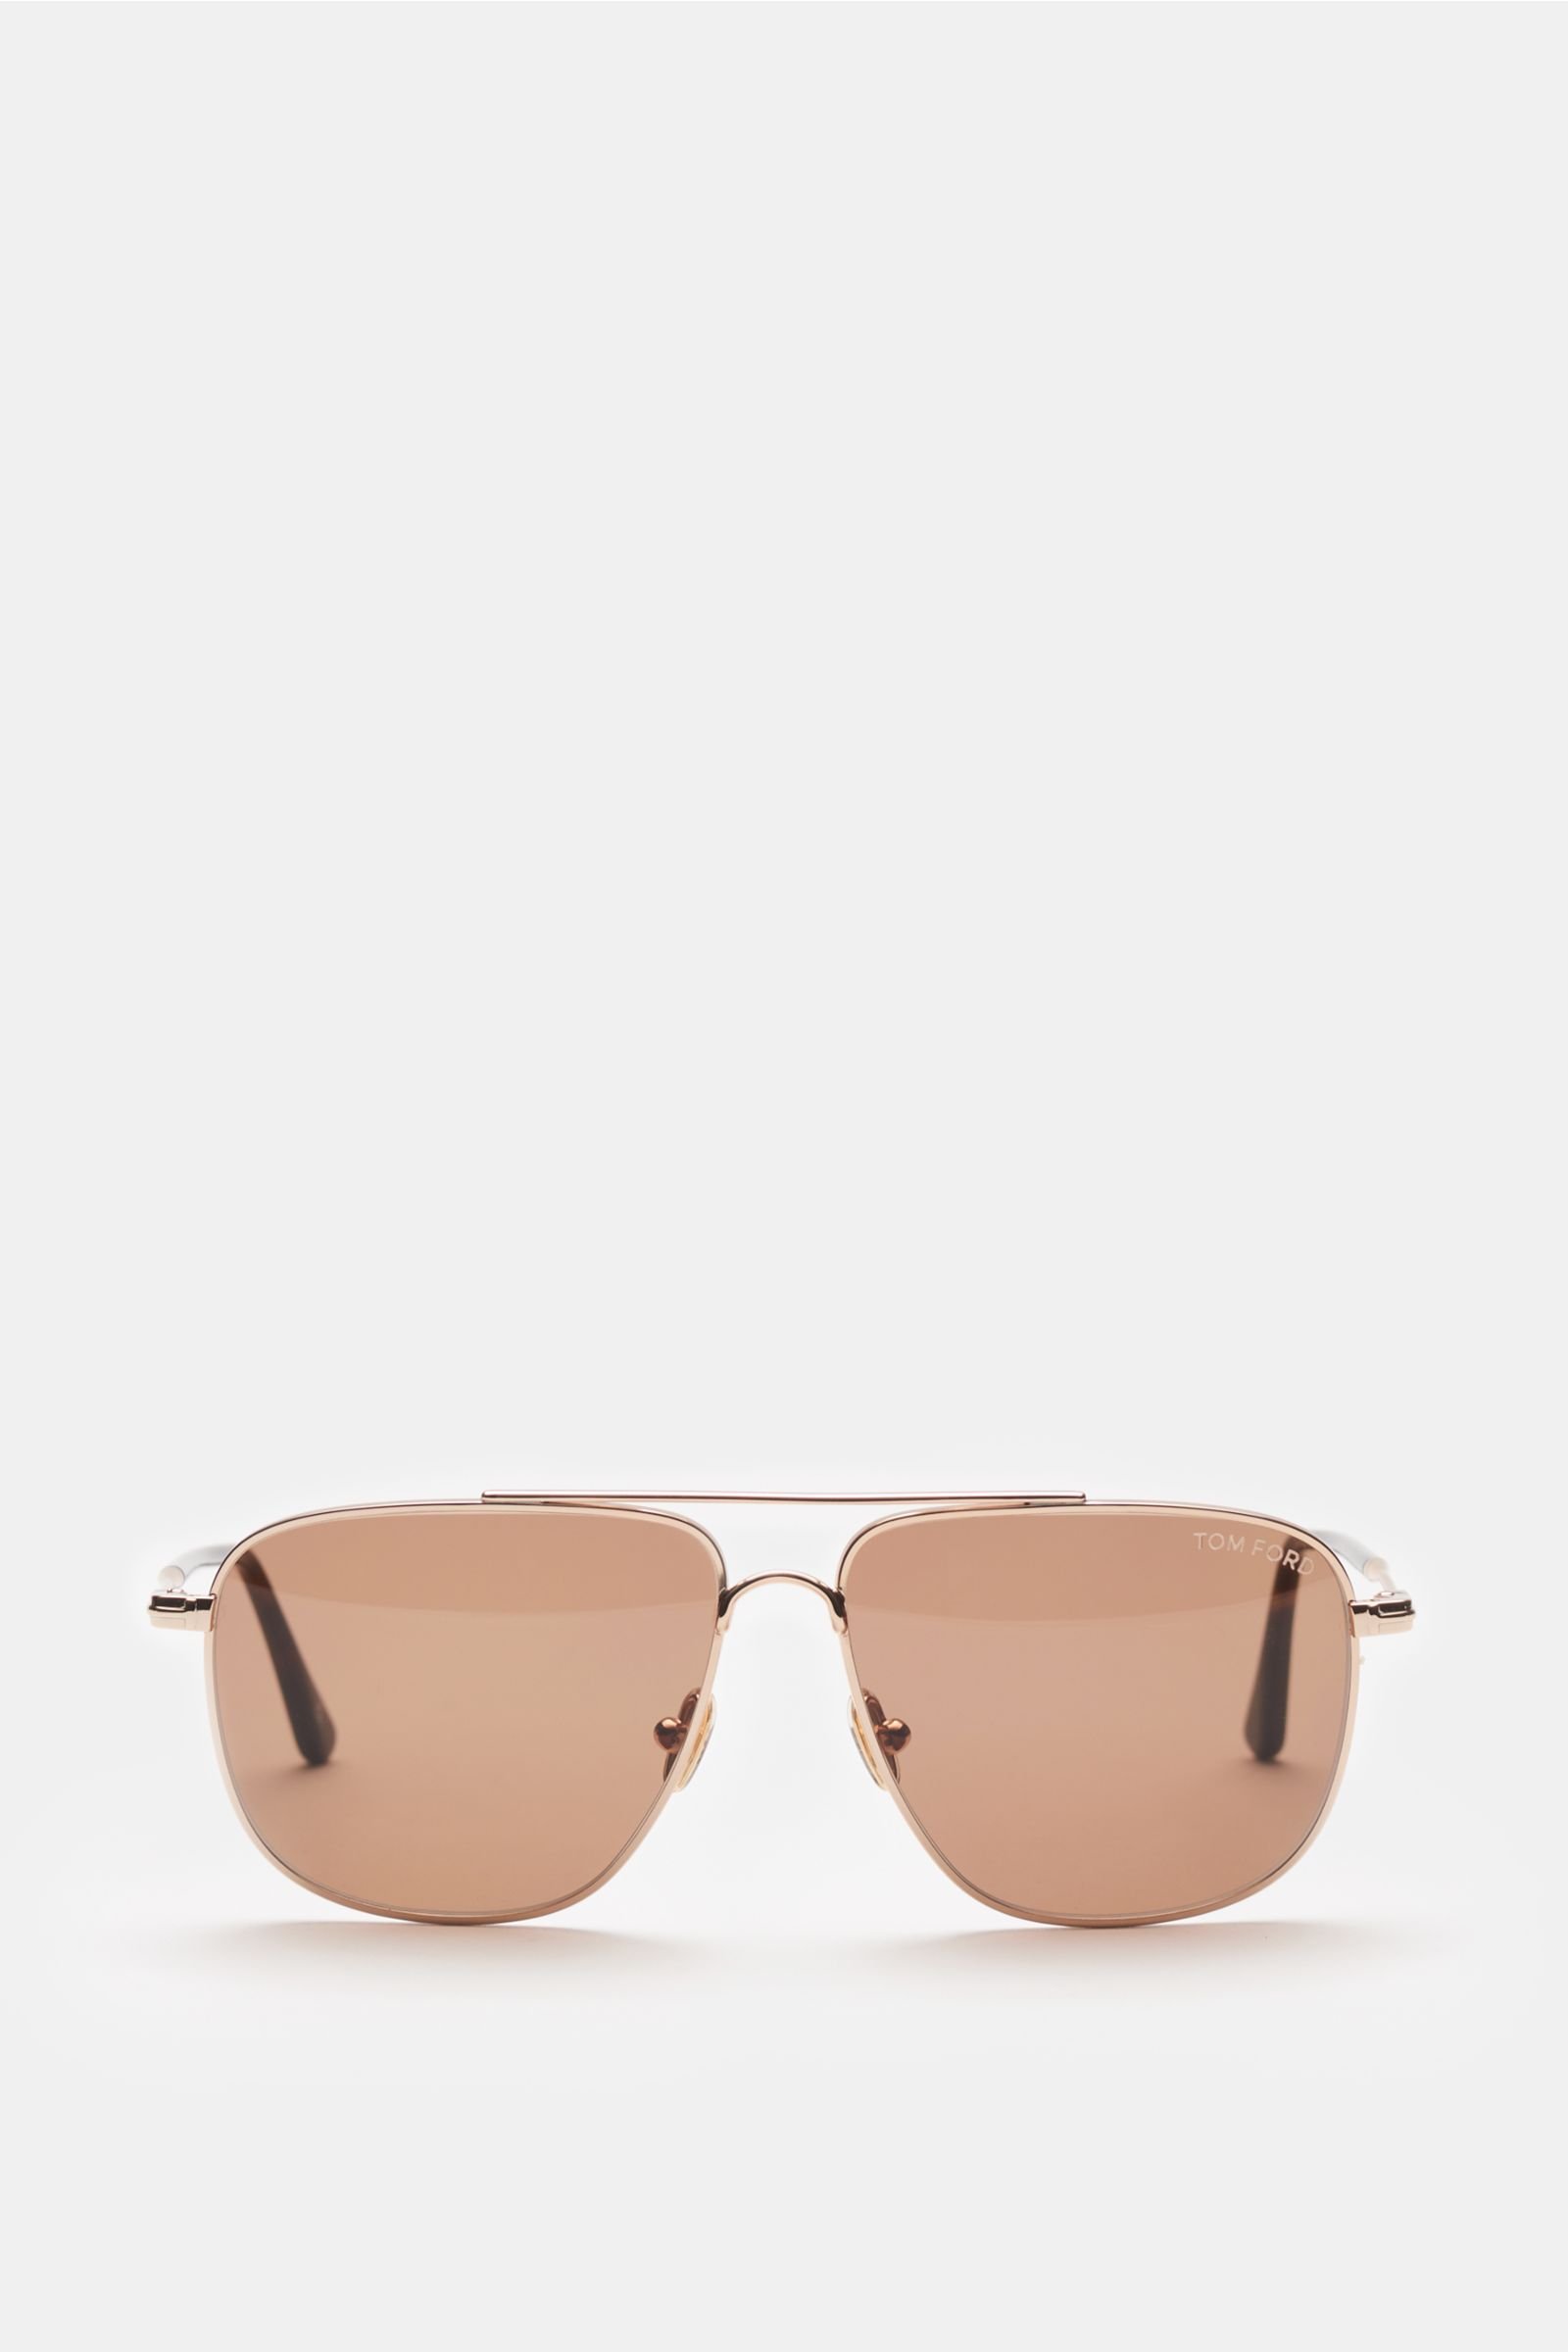 Sonnenbrille 'Len' silber/braun